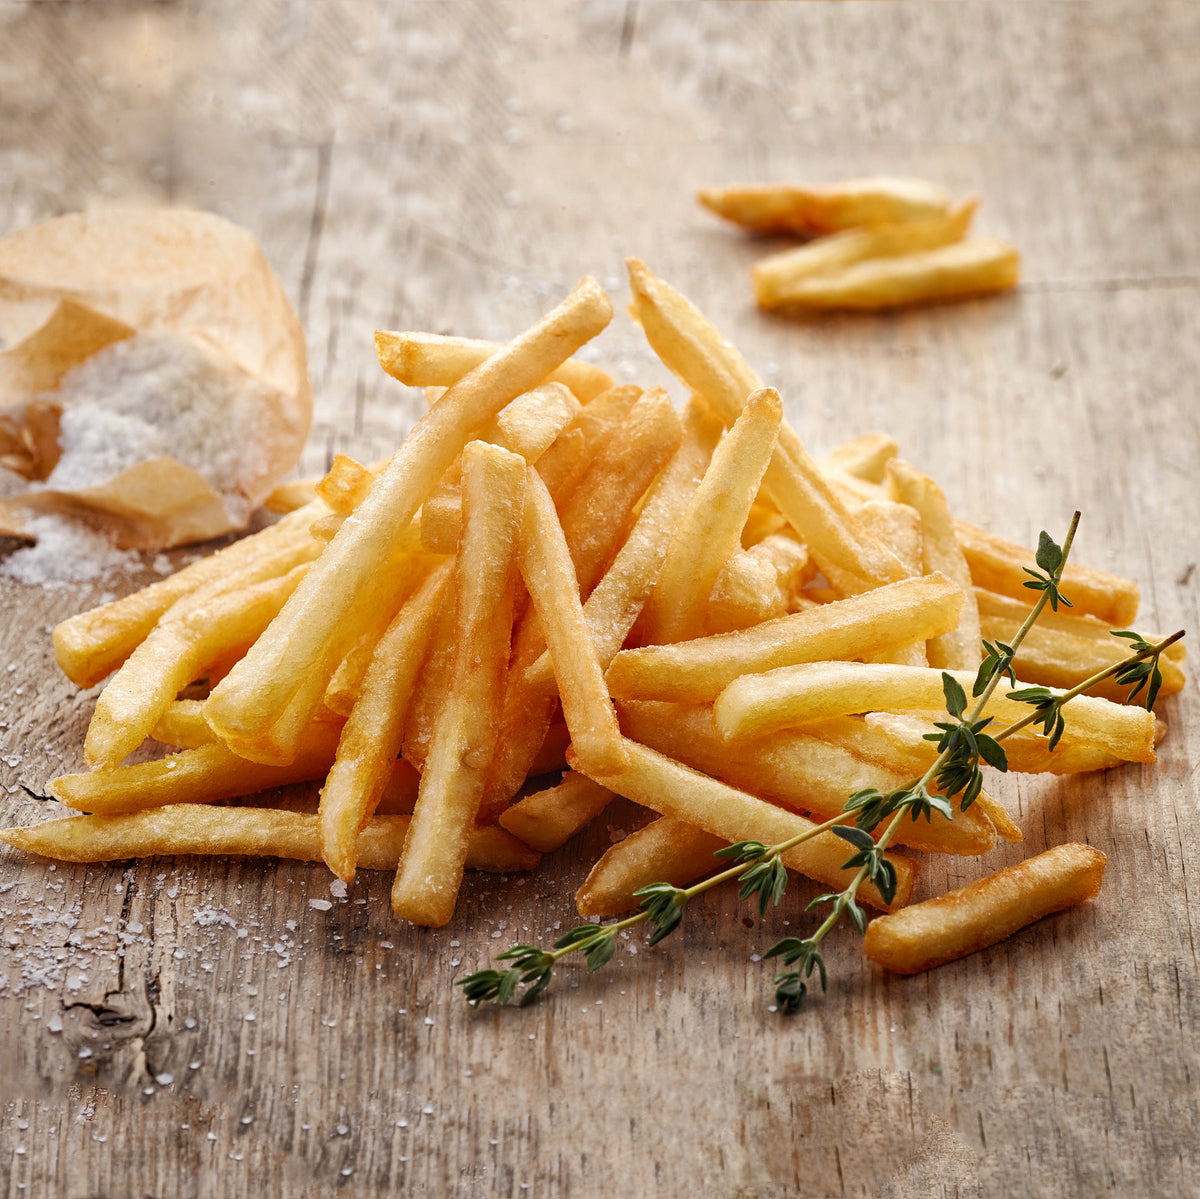 Certified Organic Frozen French Fries from Belgium (1kg) - Horizon Farms